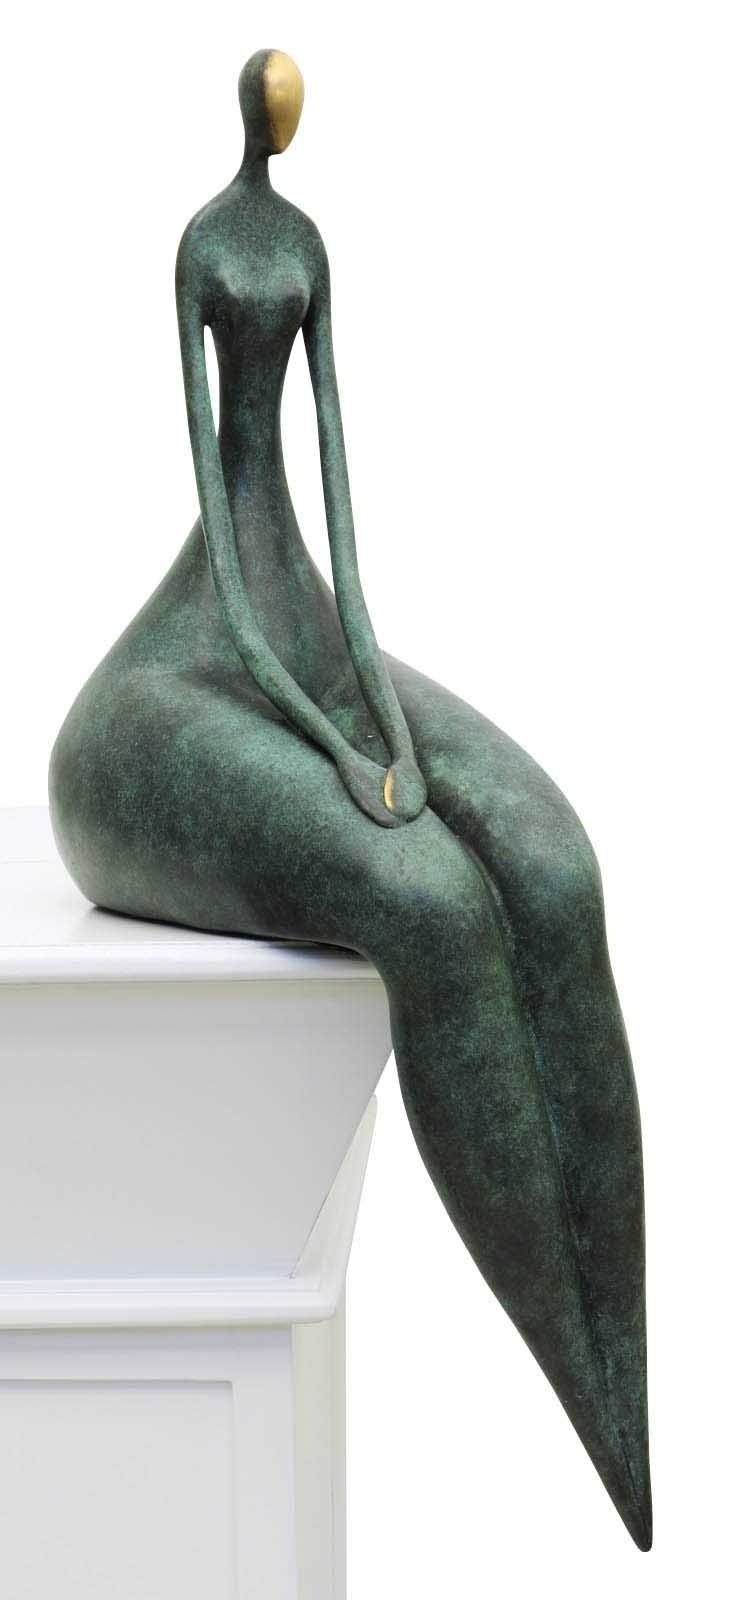 Bronzeskulptur Figur Frau Antik-Stil Aubaho - Akt Bronze Erotik Skulptur Statue 44cm